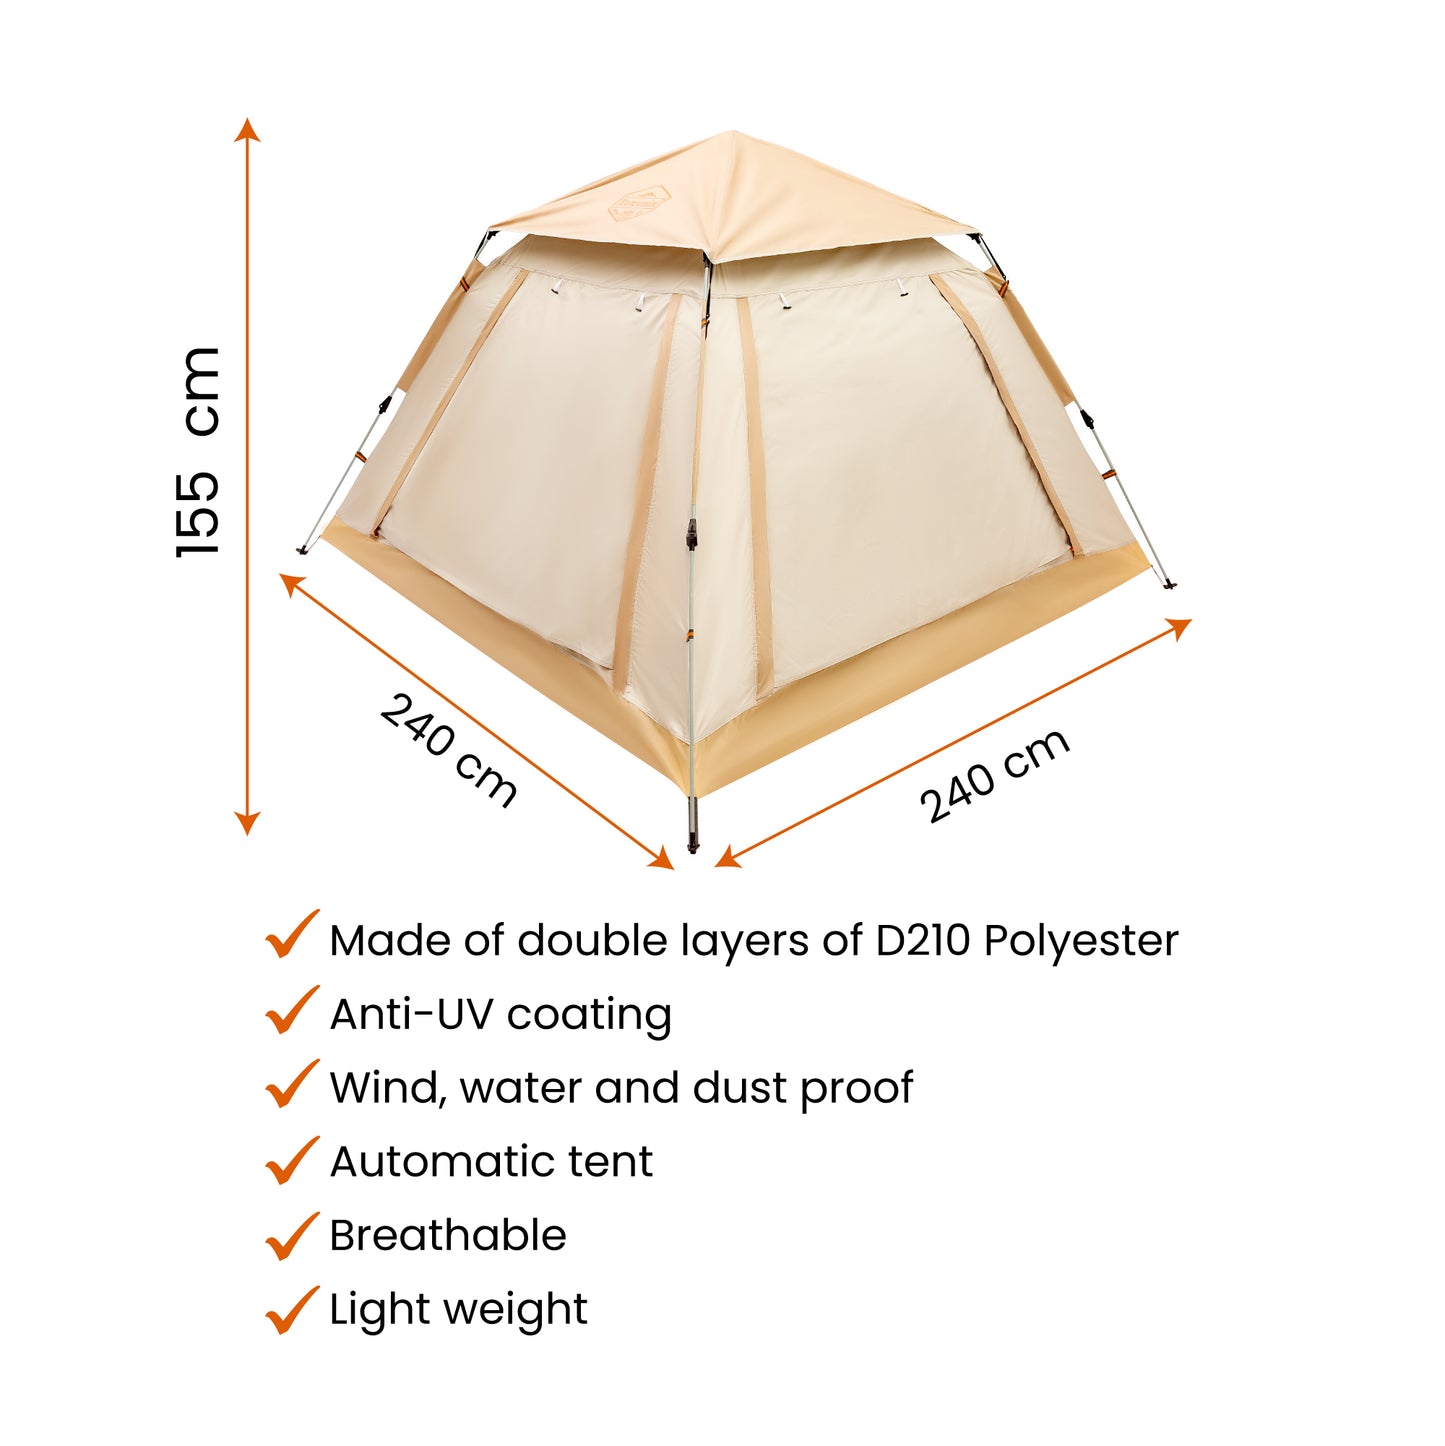 Automatic Tent 4-6 Persons Beige Color